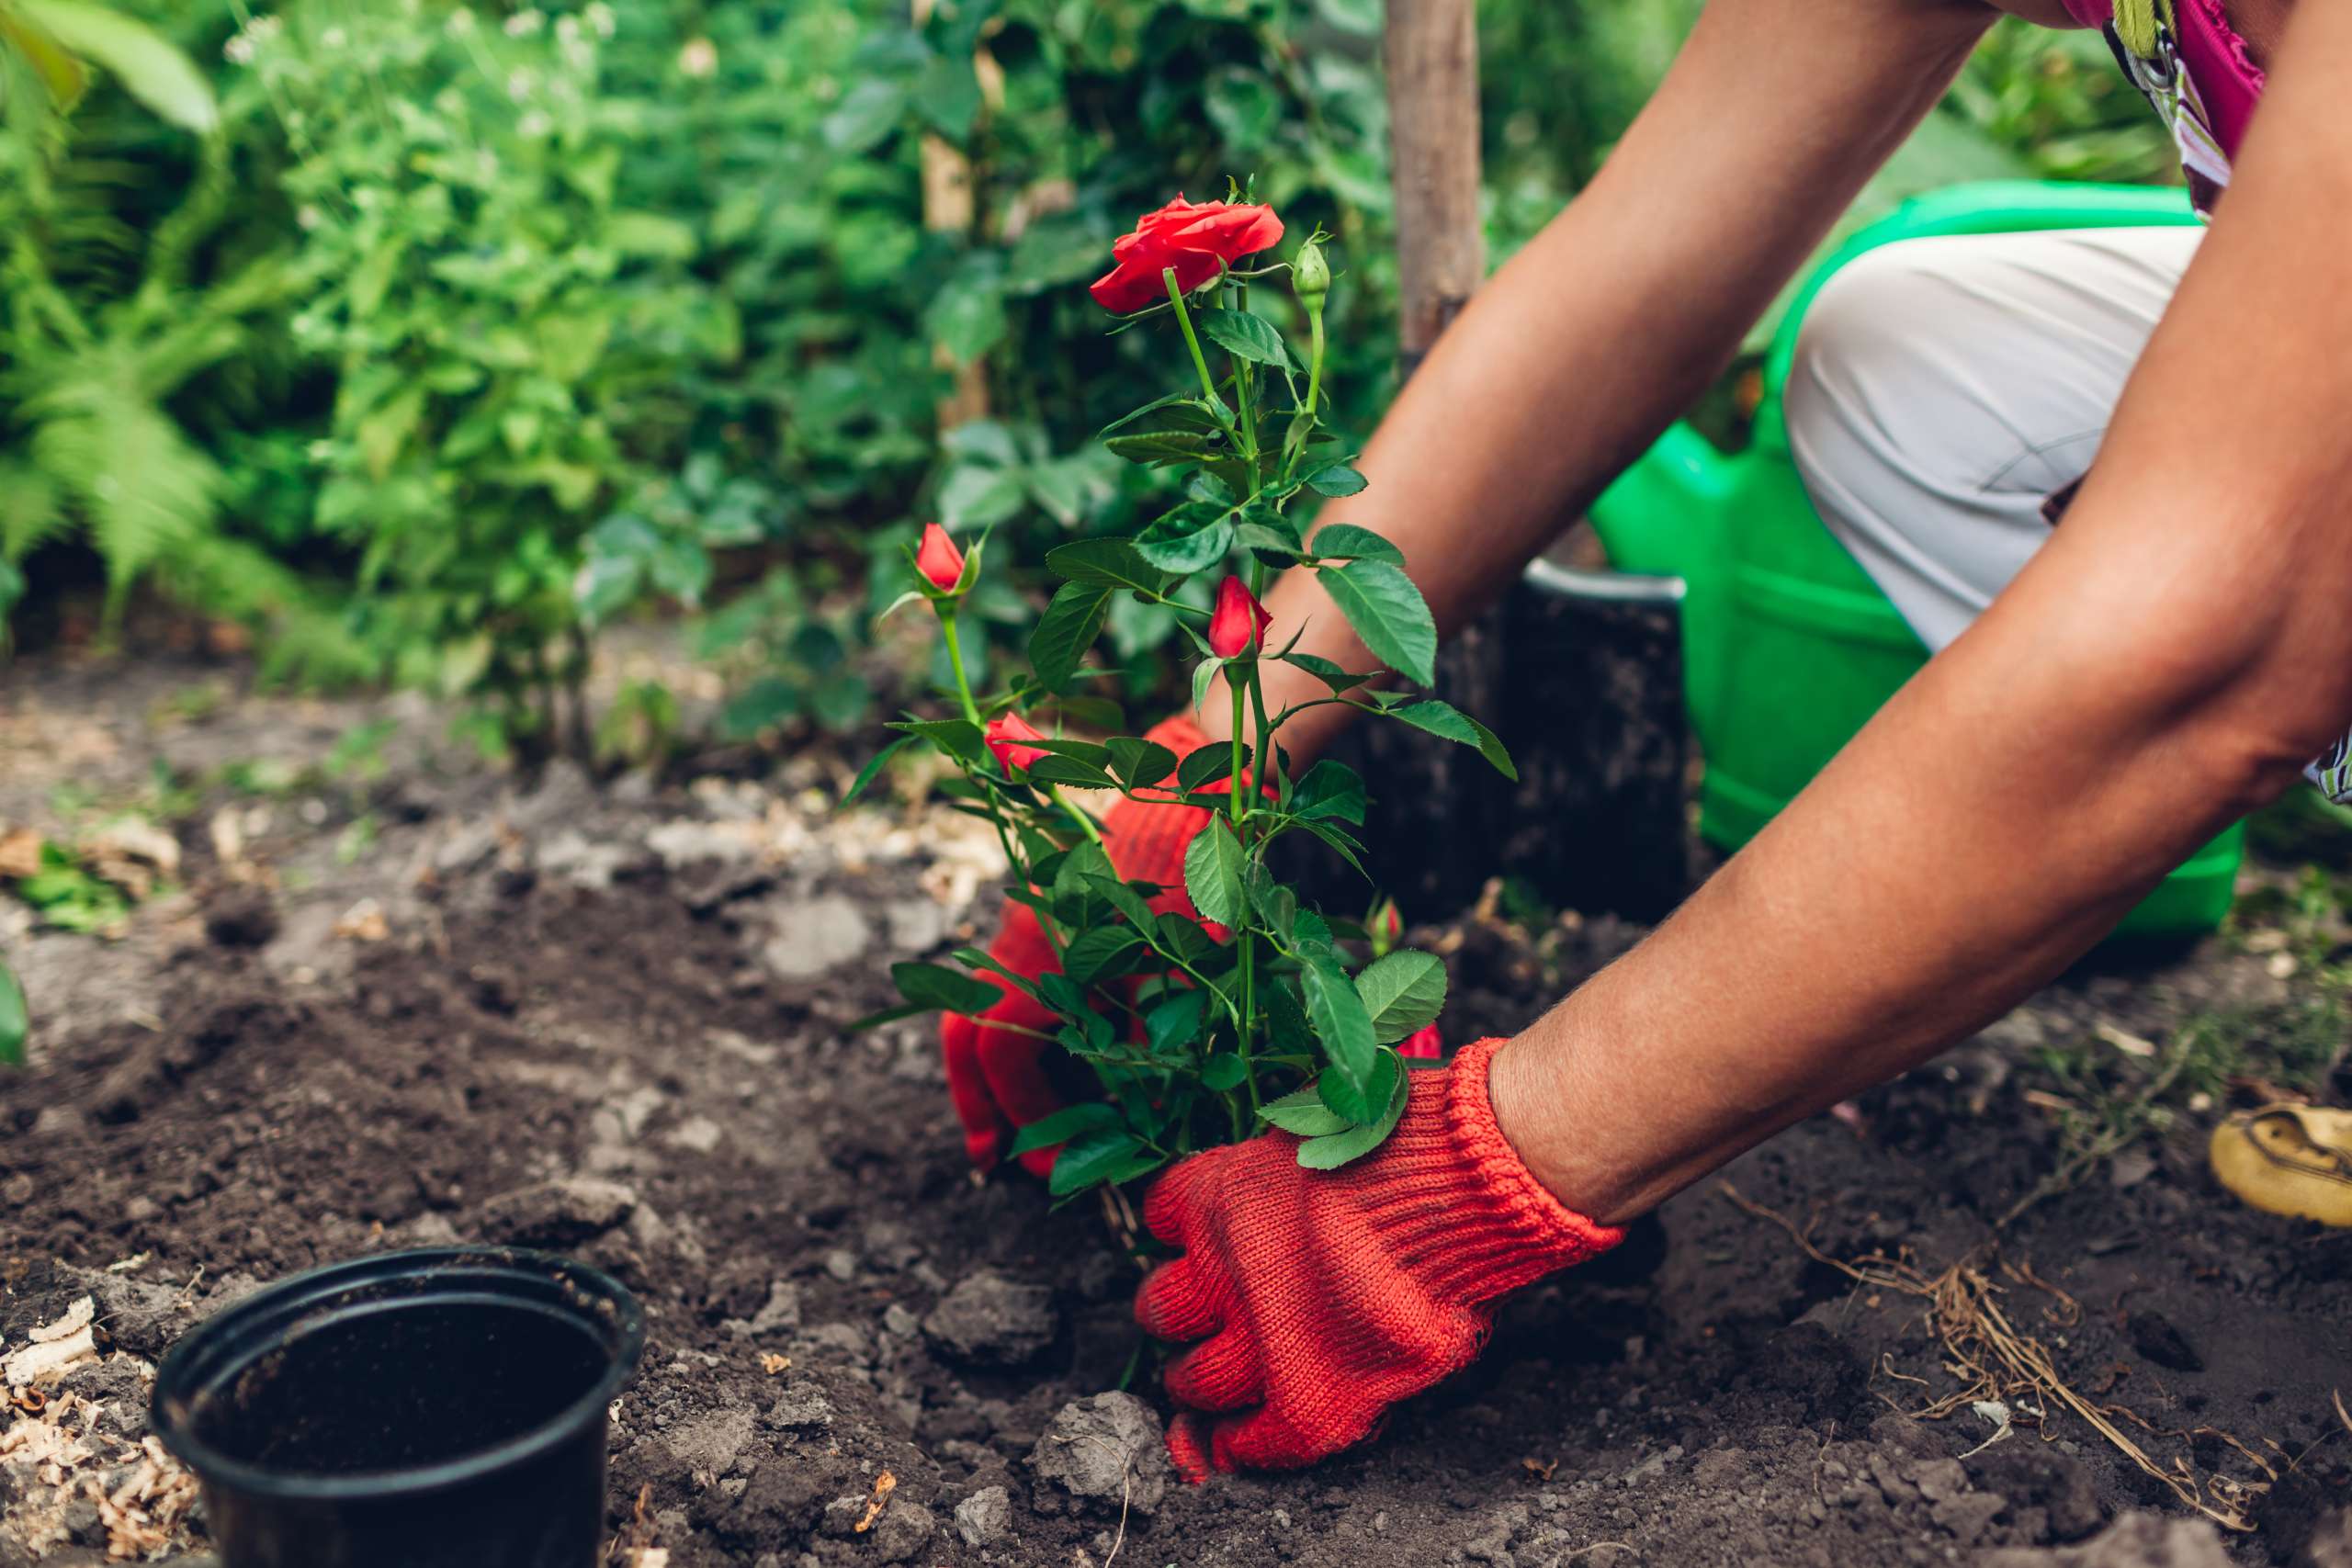 Woman gardener transplanting roses flowers from pot into wet soil. Summer garden work- Gardening Activities for Children